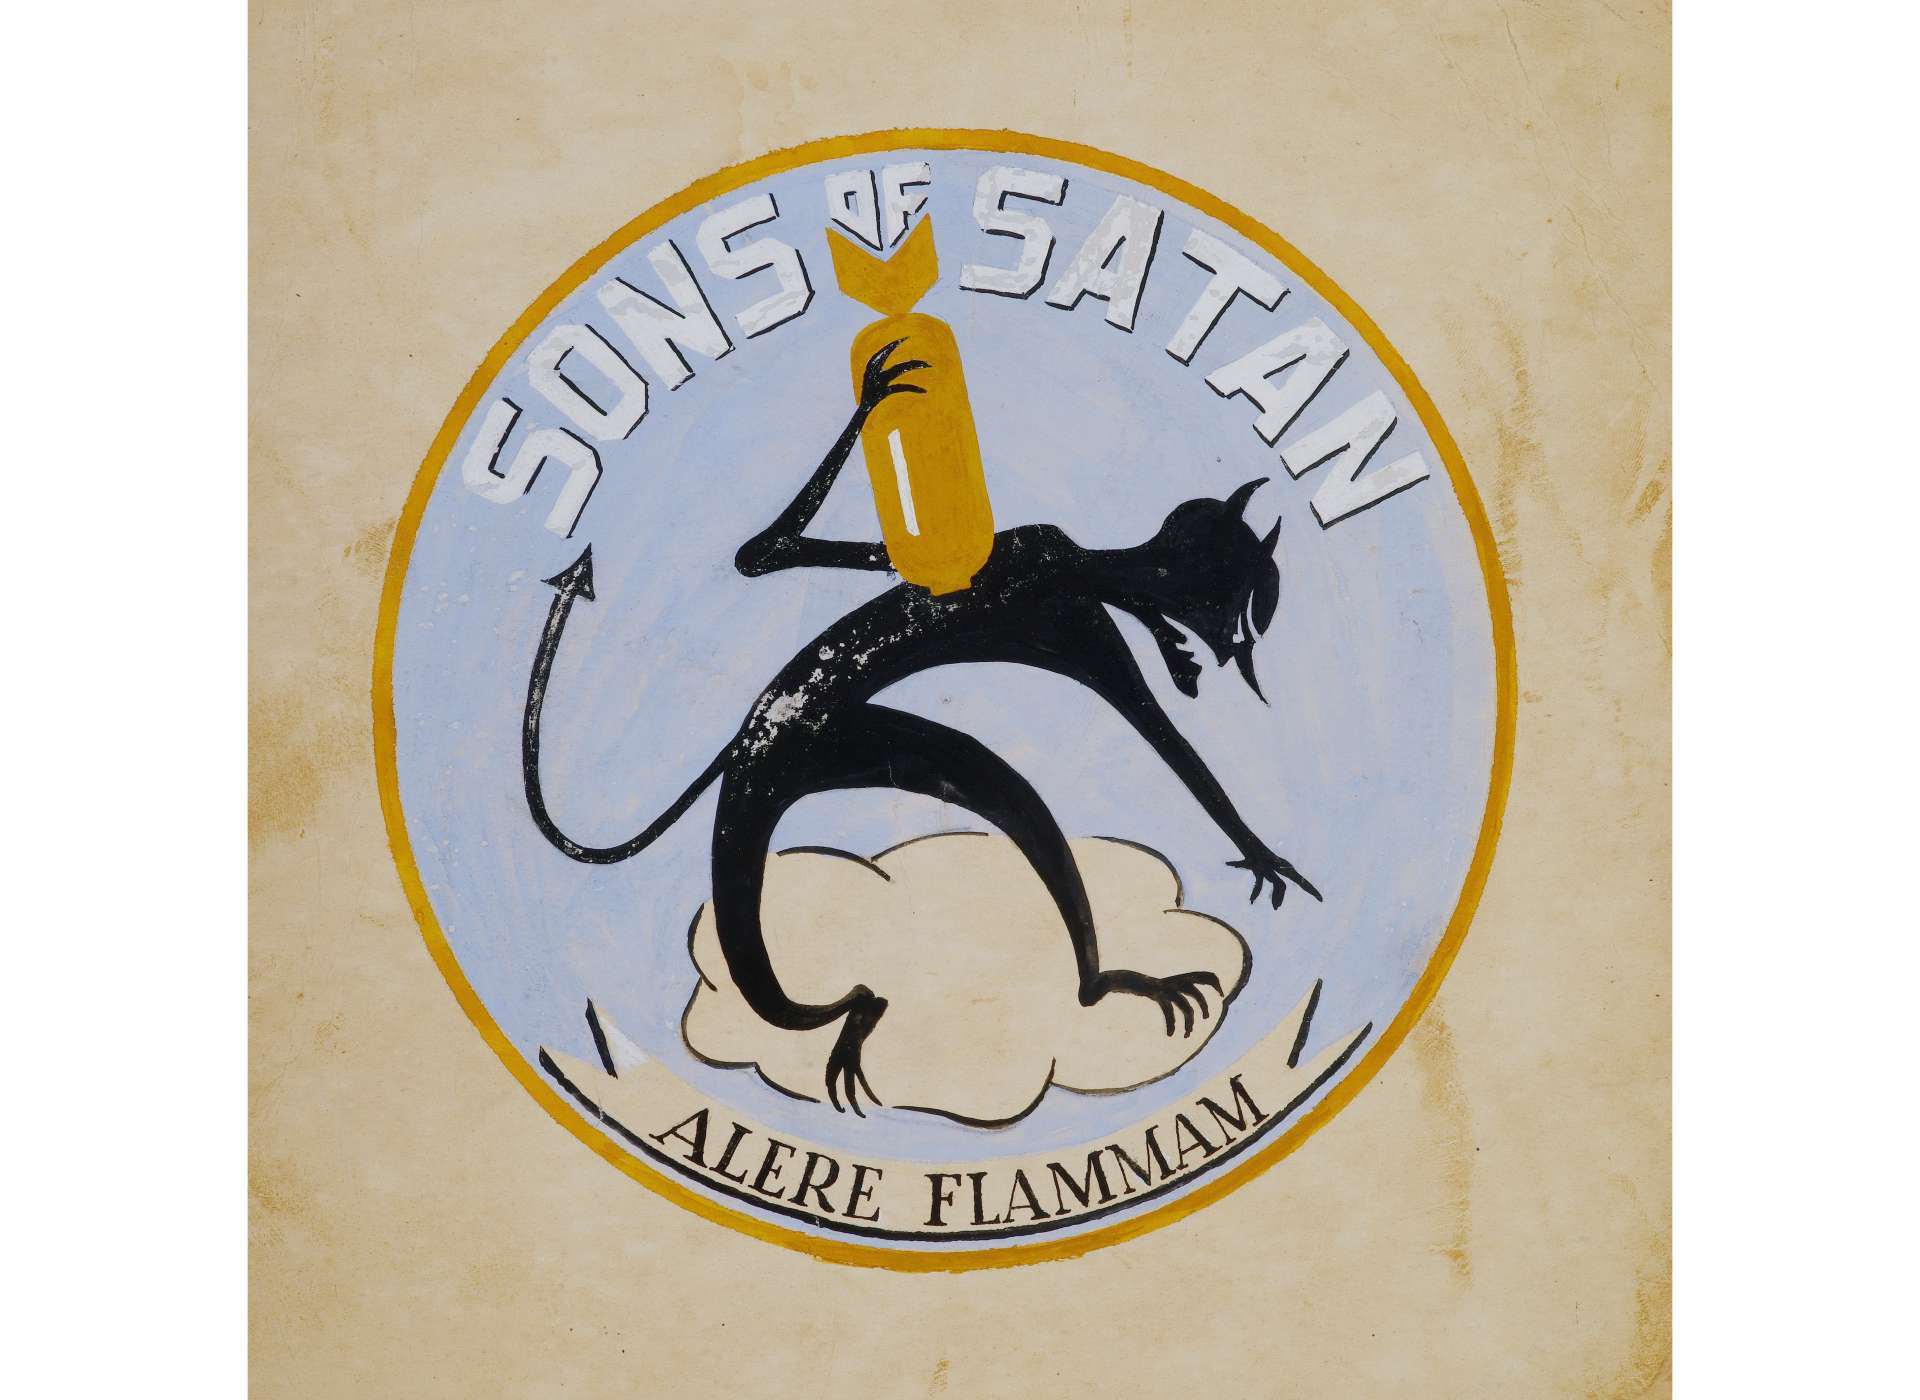 VMSB-214 “Sons of Satan” artwork by Sgt. Paul Arlt, USMCR. Gouache on illustration board. Based on an original idea by Lt Wallace P. Wyatt. Courtesy of the National Museum of the Marine Corps, Triangle, Virginia.